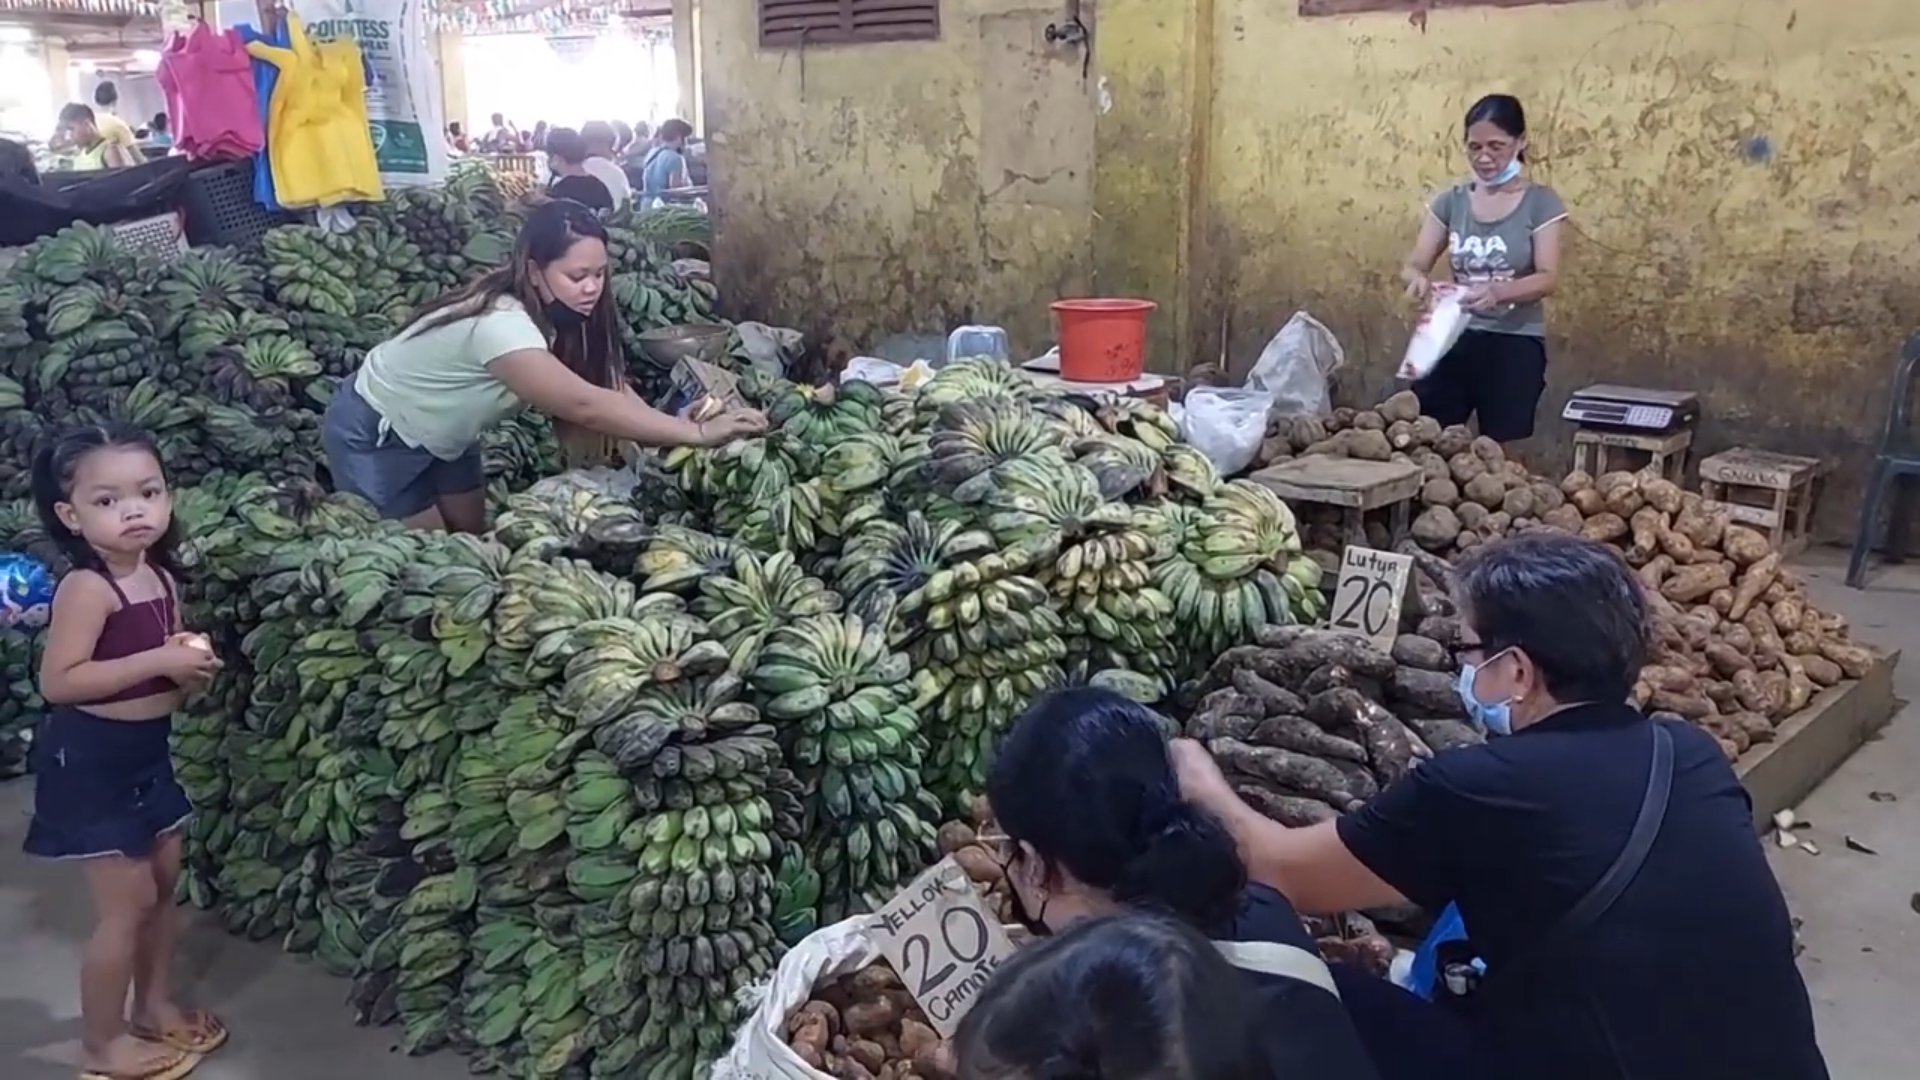 SIGHTS OF CAGAYAN DE ORO CITY & NORTHERN MINDANAO - At the Root Vegetable Market in Cagayan de Oro